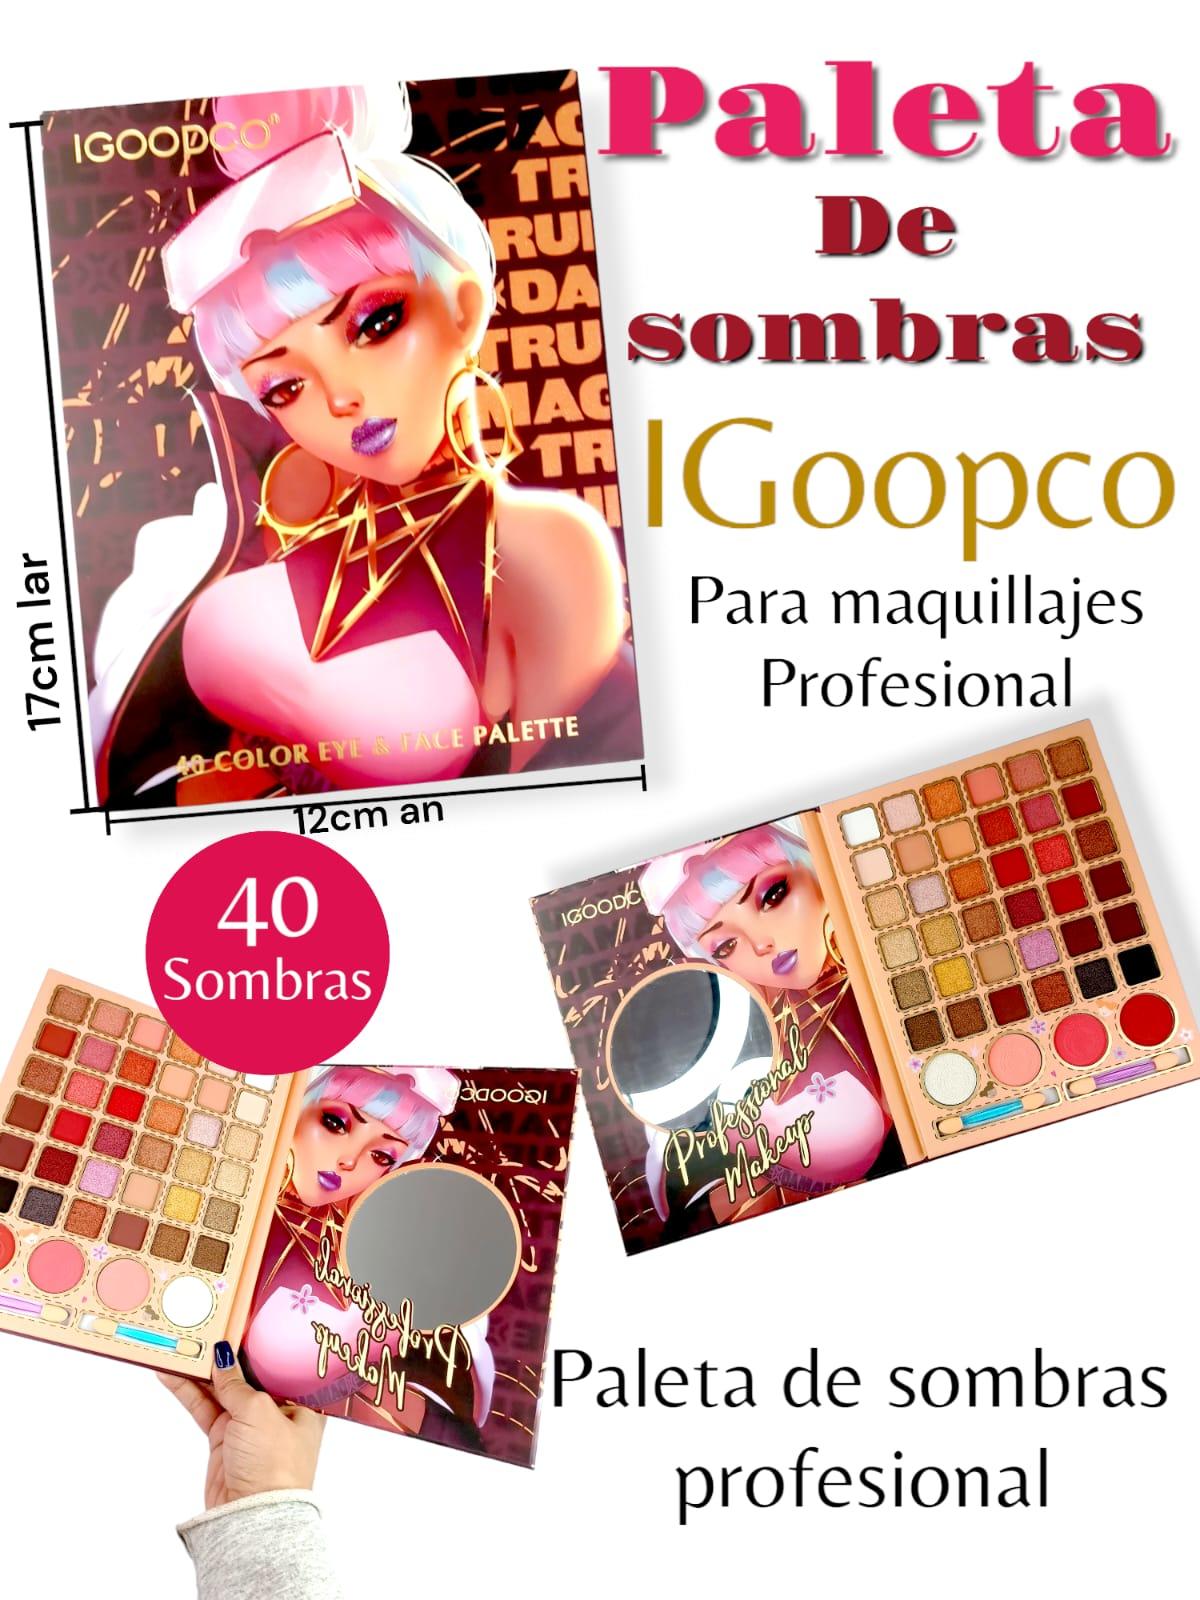 Paleta de Sombras IGOOPCO Para Maquillajes Profesional 17cm